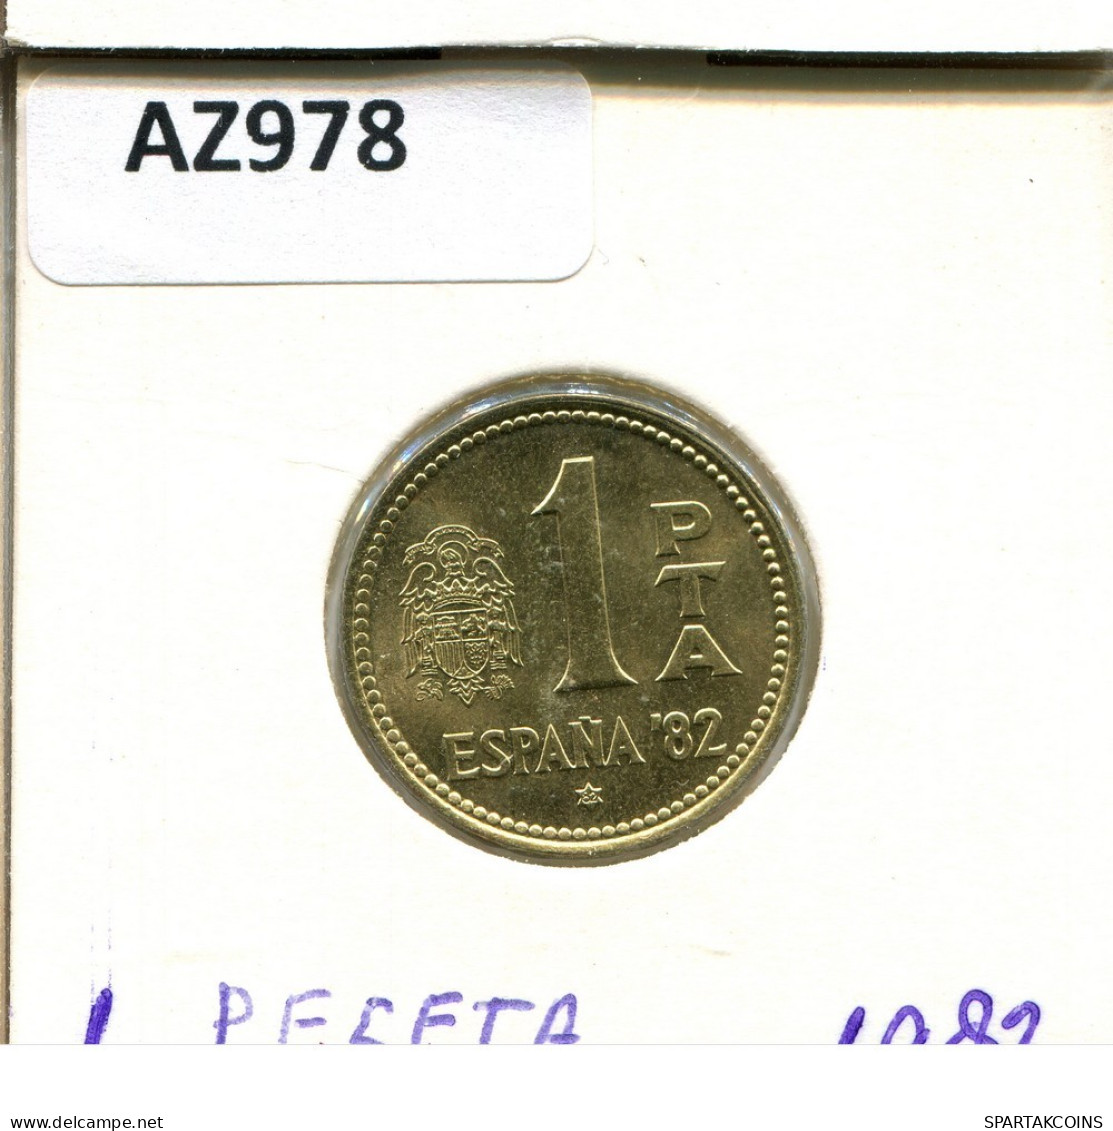 1 PESETA 1980 SPAIN Coin #AZ978.U.A - 1 Peseta